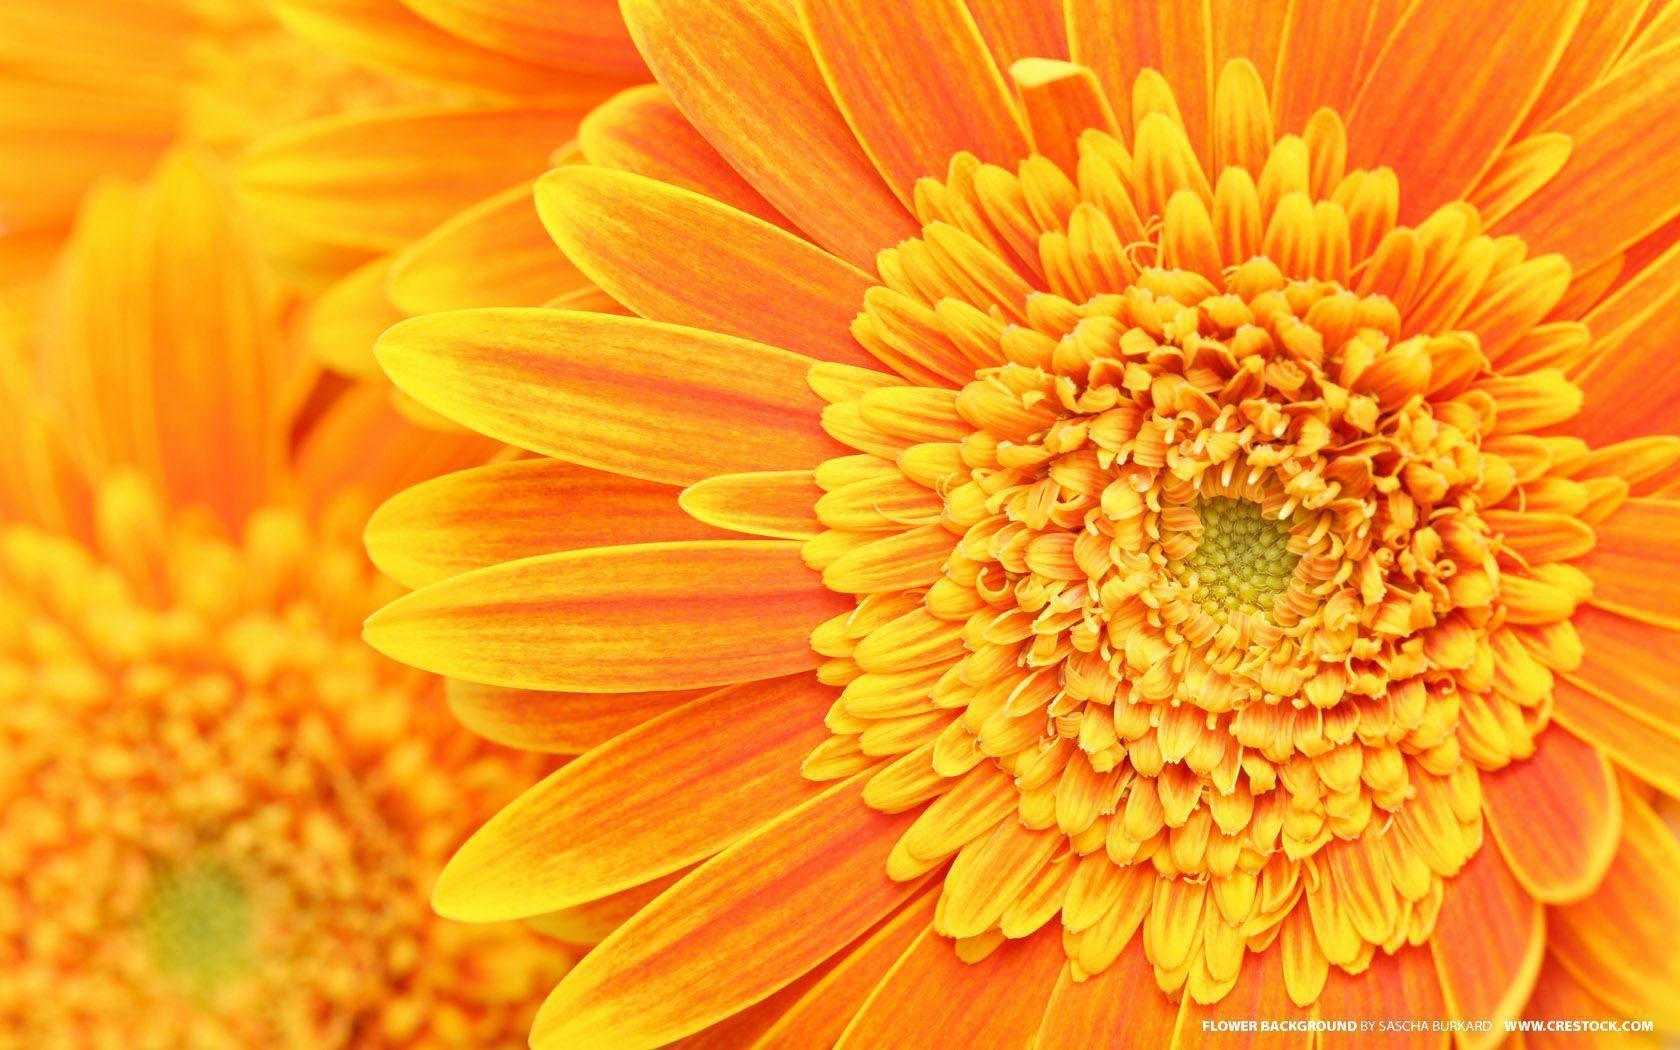 Orange Flower Background Wallpaper Image featuring